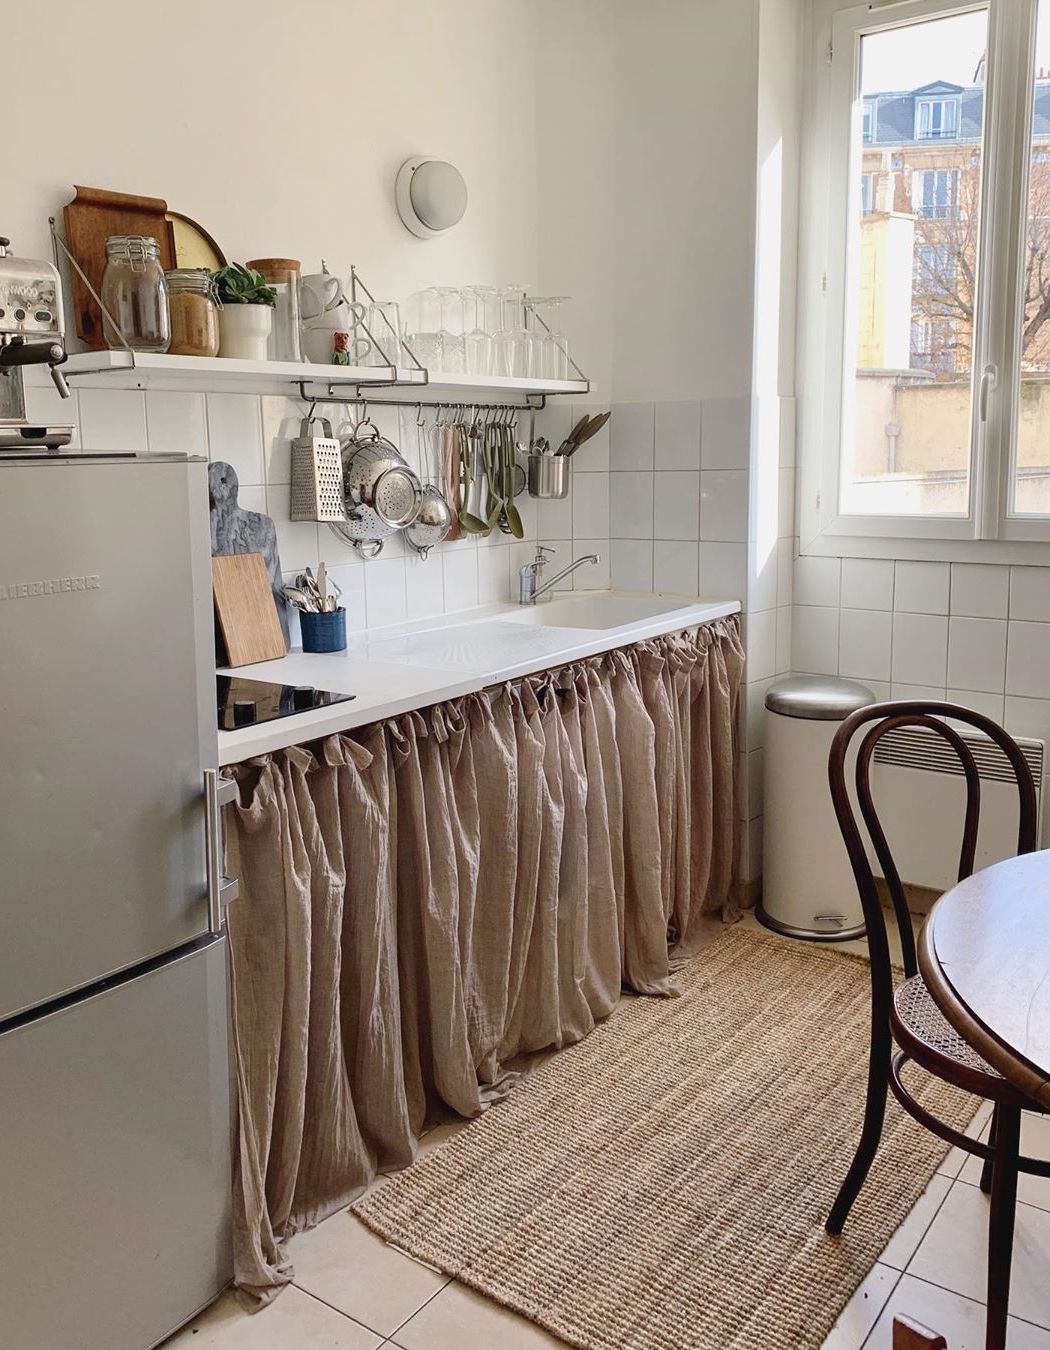 Simple Parisian Kitchen Design with Curtains below Counter via Instagram